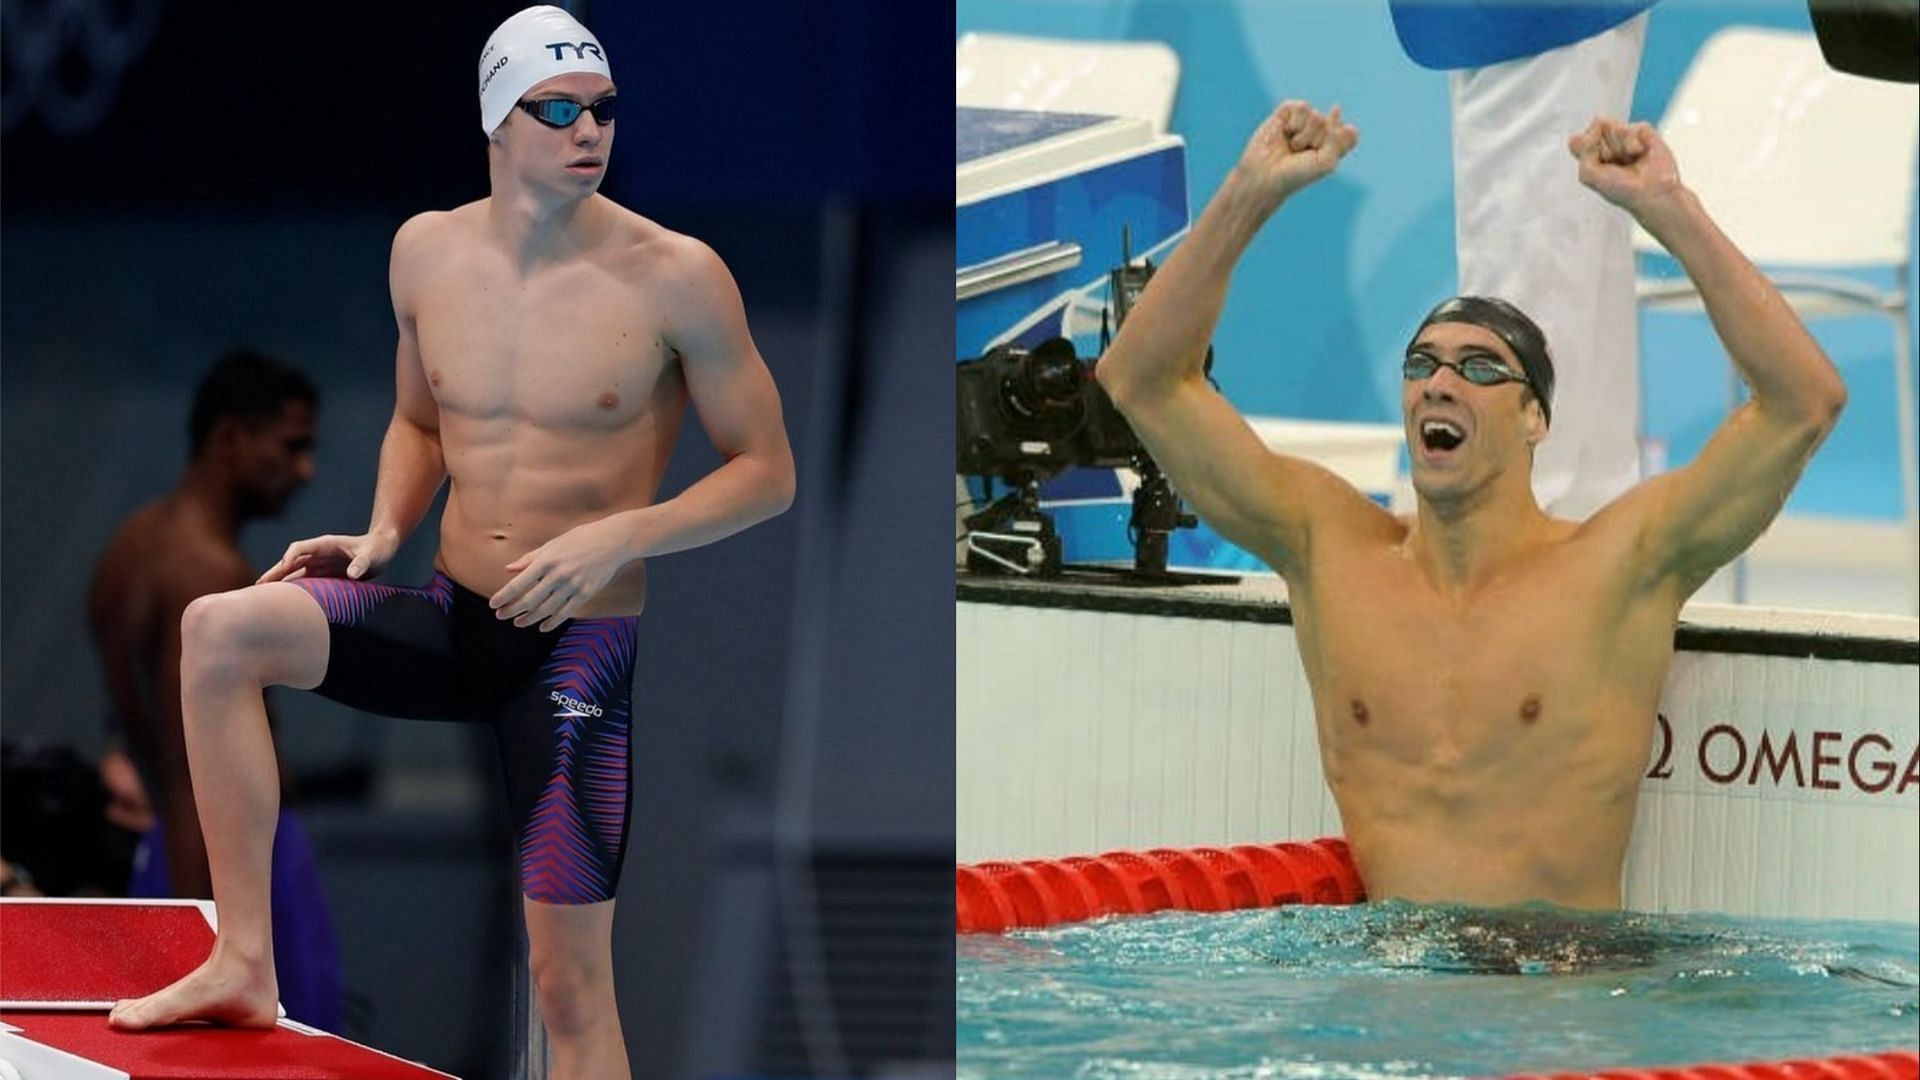 Leon Marchand (Image via leon.marchand31/Instagram) and Michael Phelps (Image via m_phelps00/Instagram)